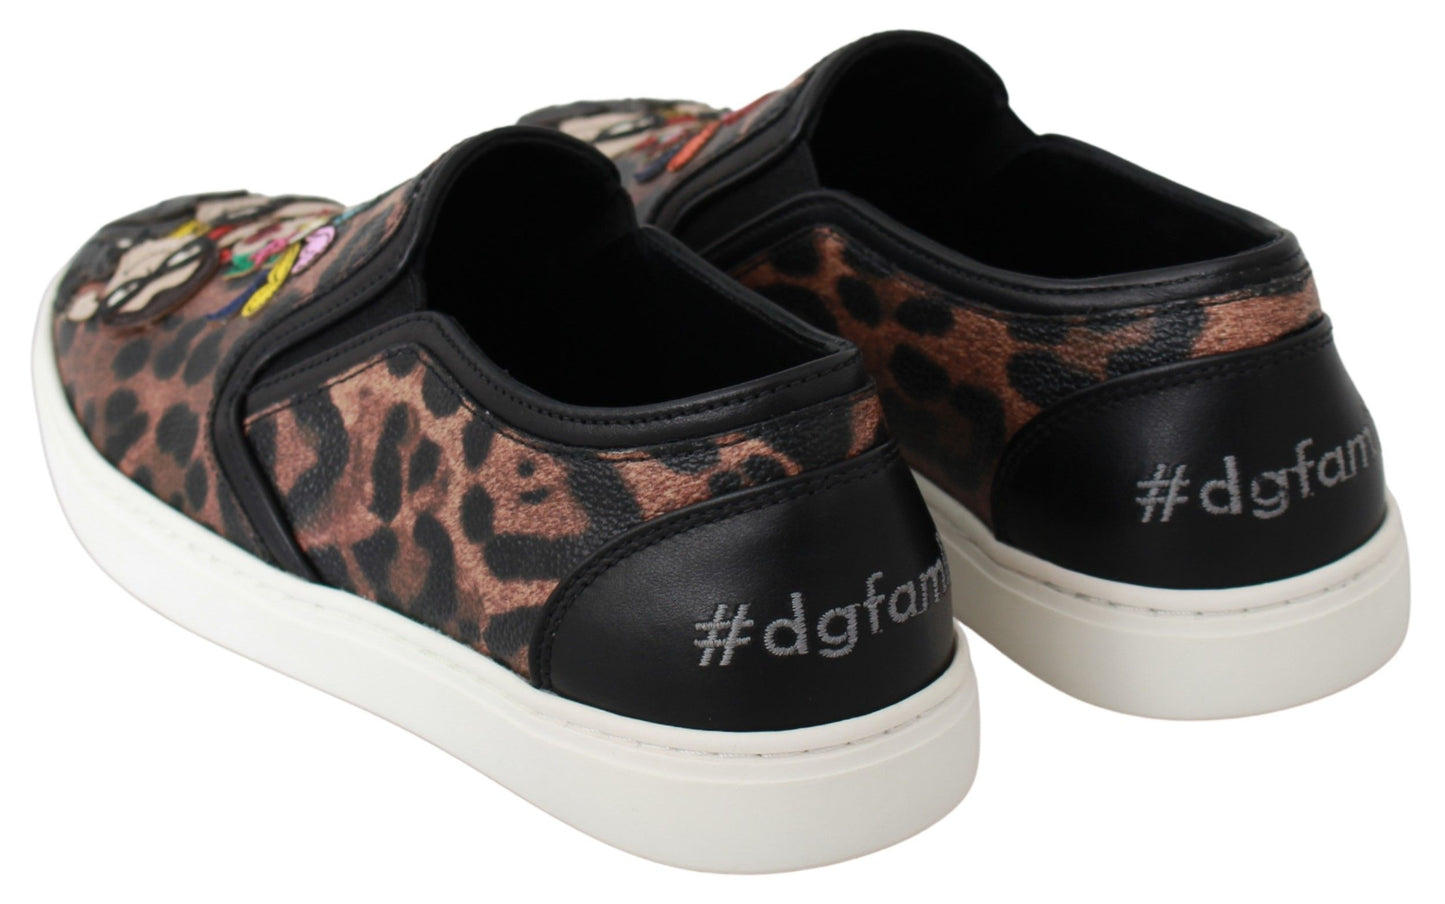 Dolce & Gabbana Leder Leopard #dgfamily Slaafers Schuhe